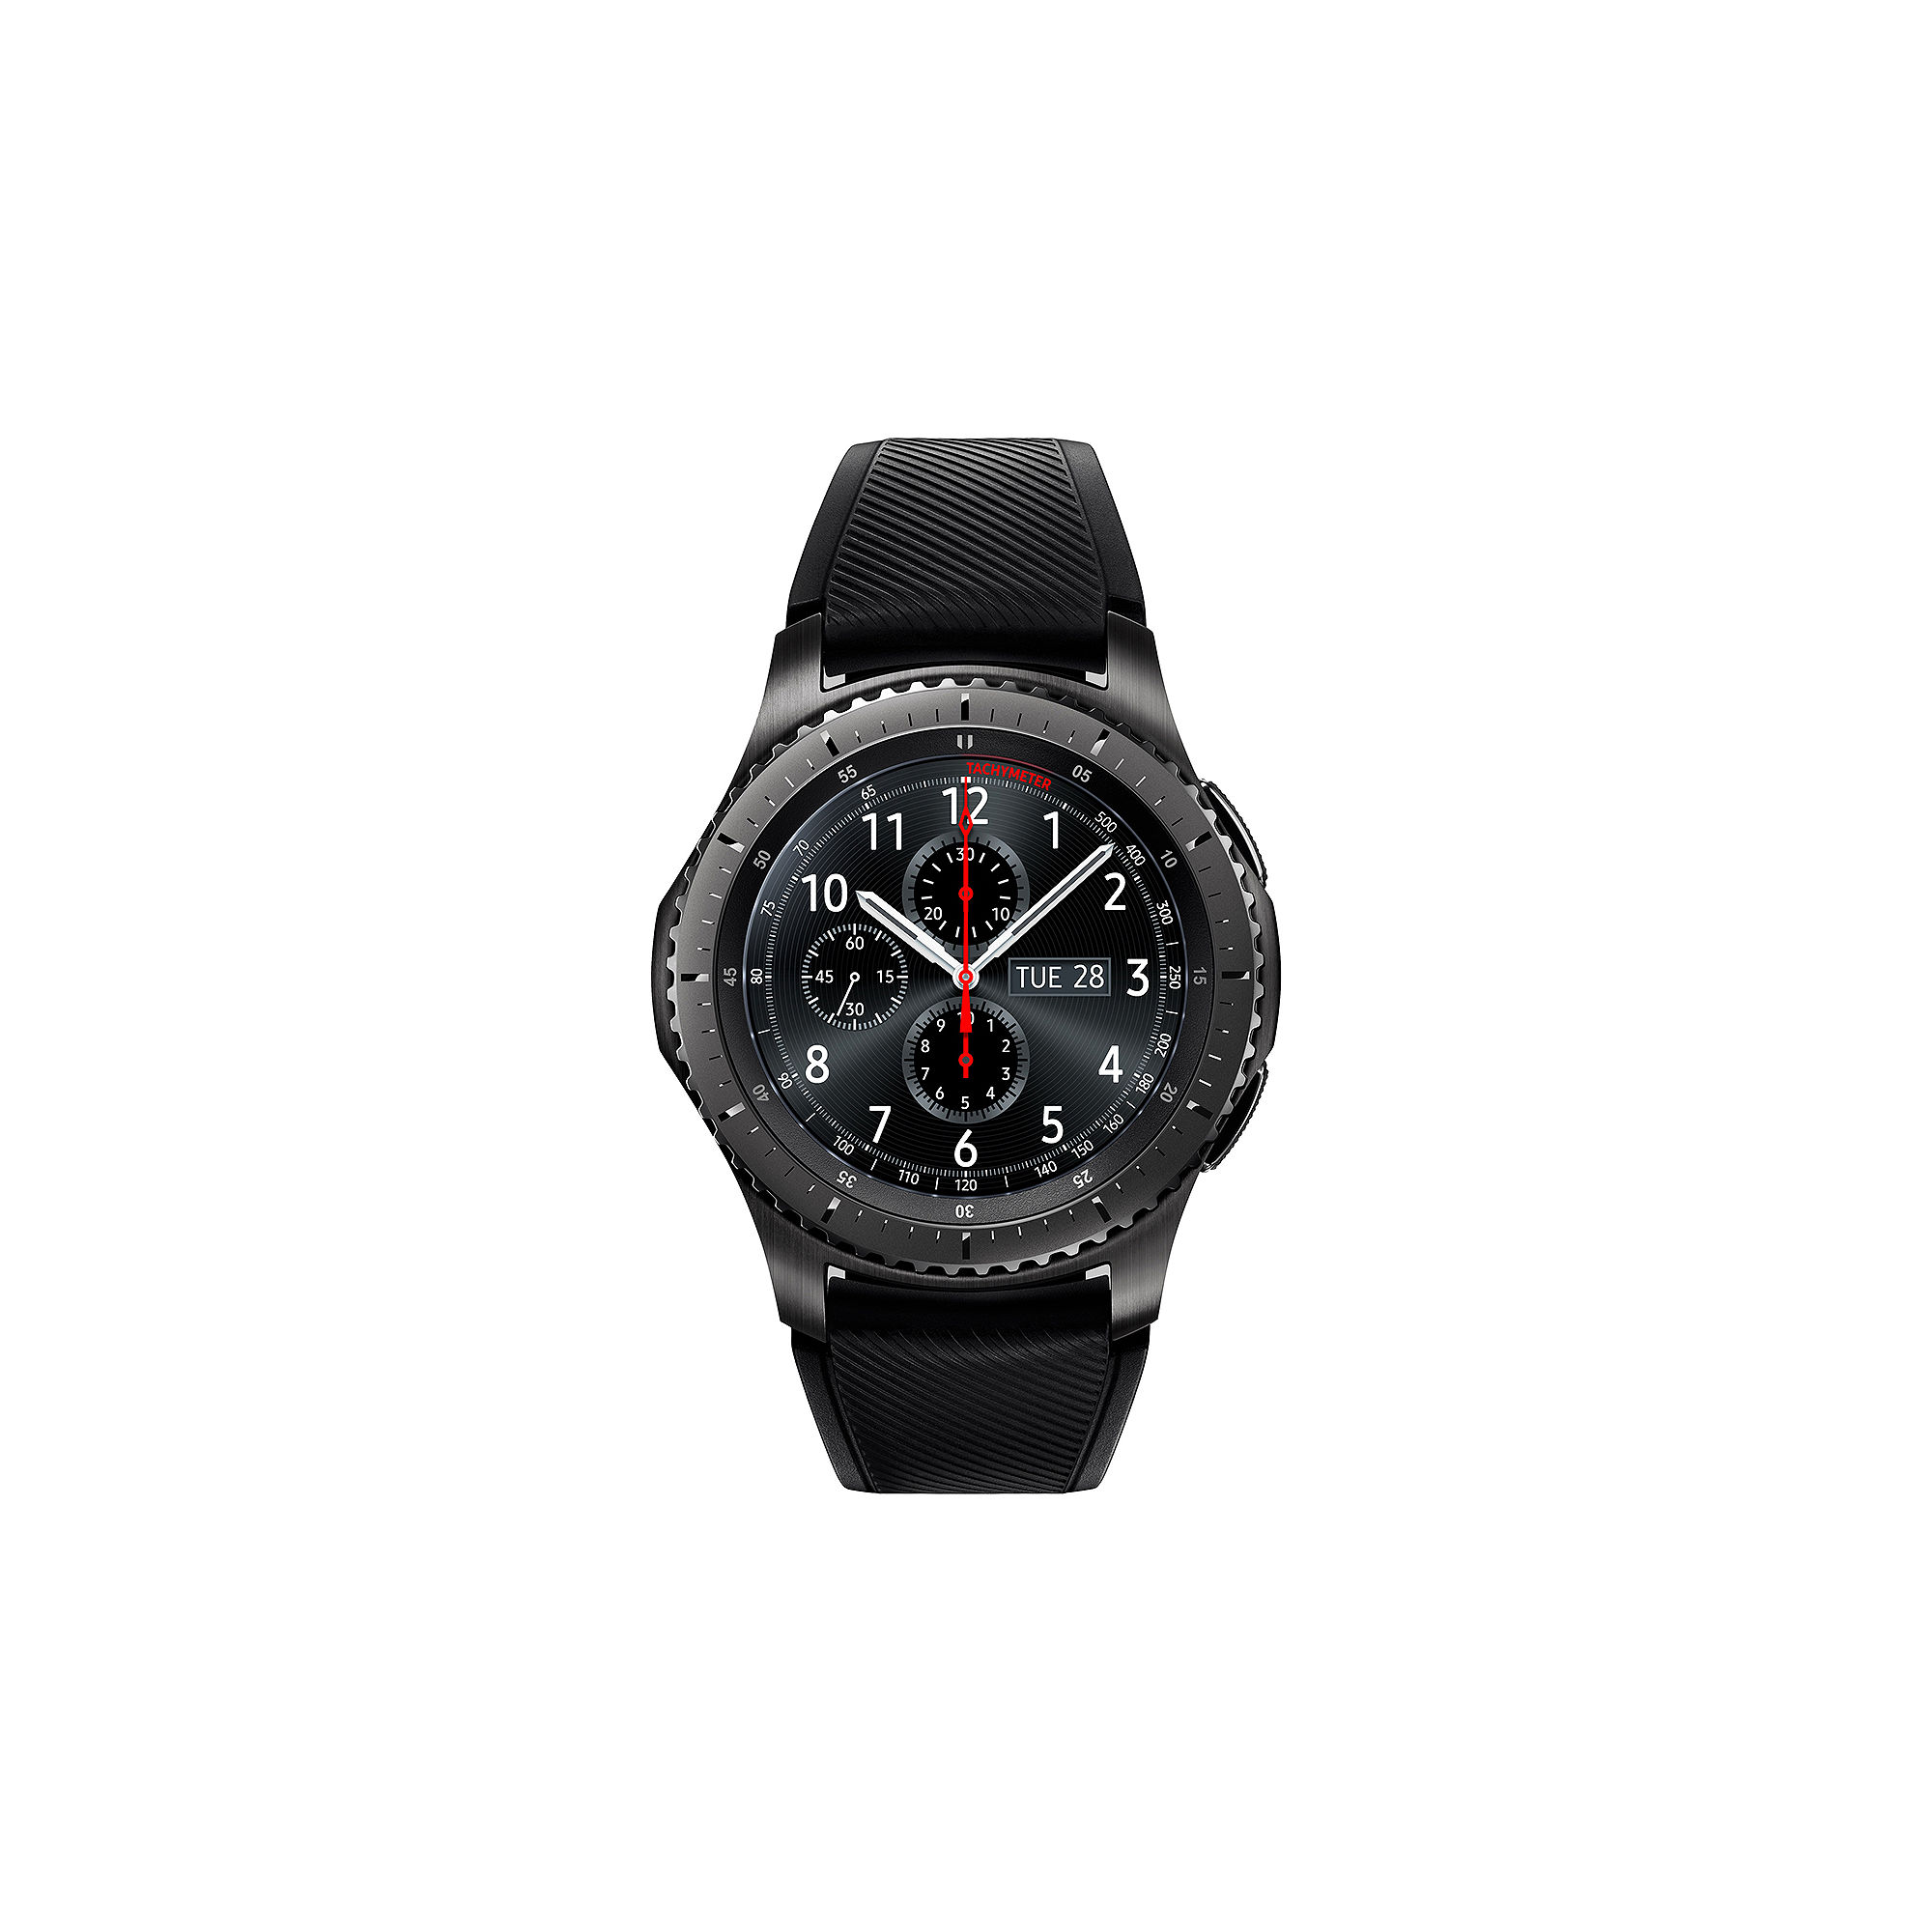 SAMSUNG Gear S3 Frontier Smart Watch Black 46mm - SM-R760NDAAXAR - image 3 of 9